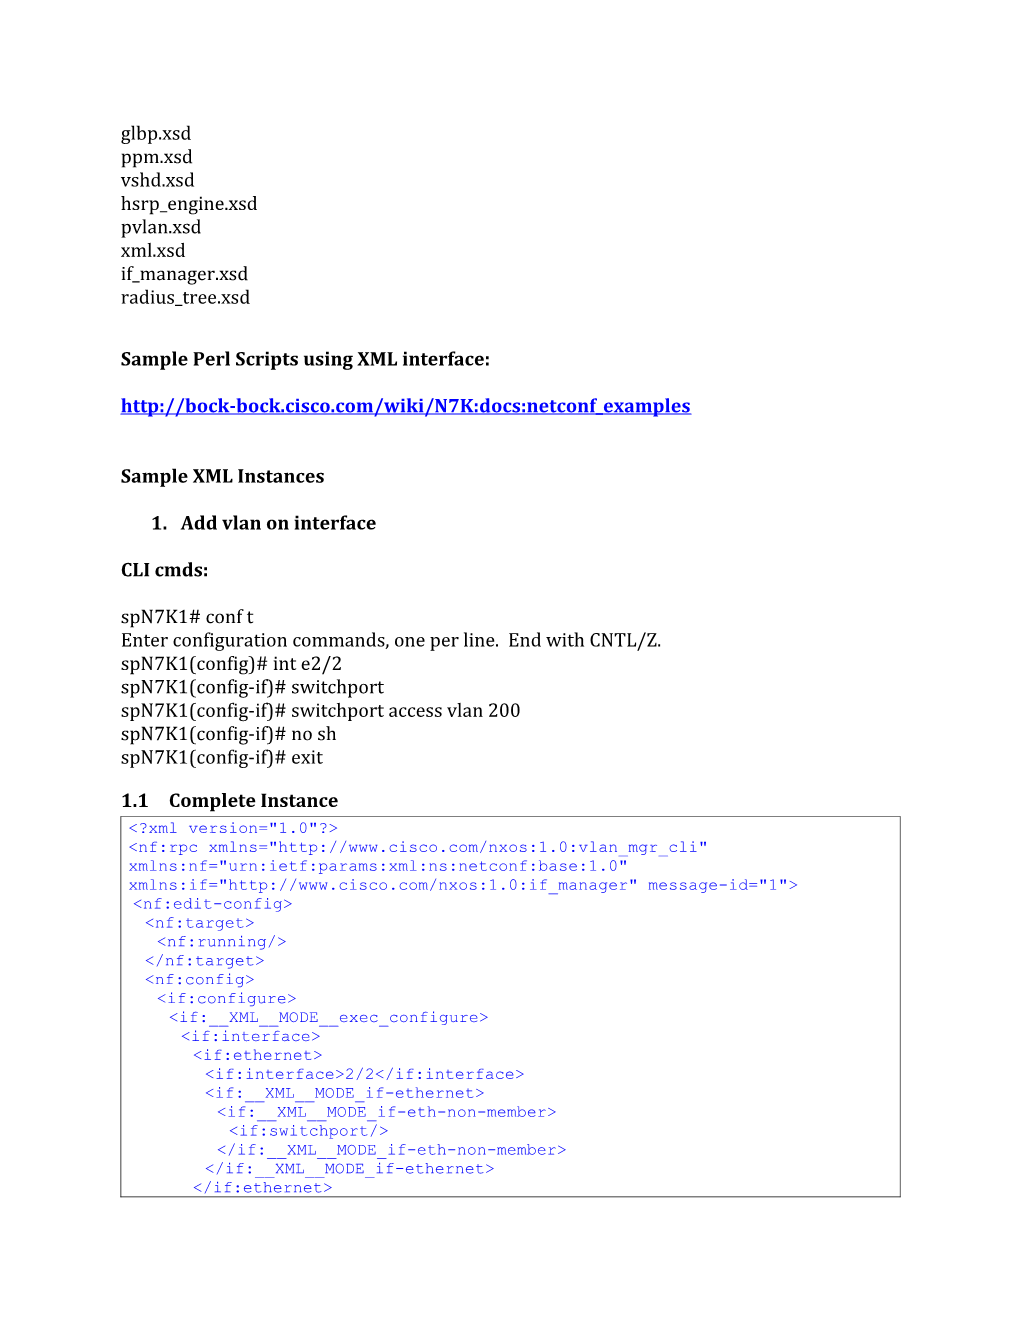 Nexus 7000 XML Schema Files (Xsds) and Sample XML Instances/Scripts